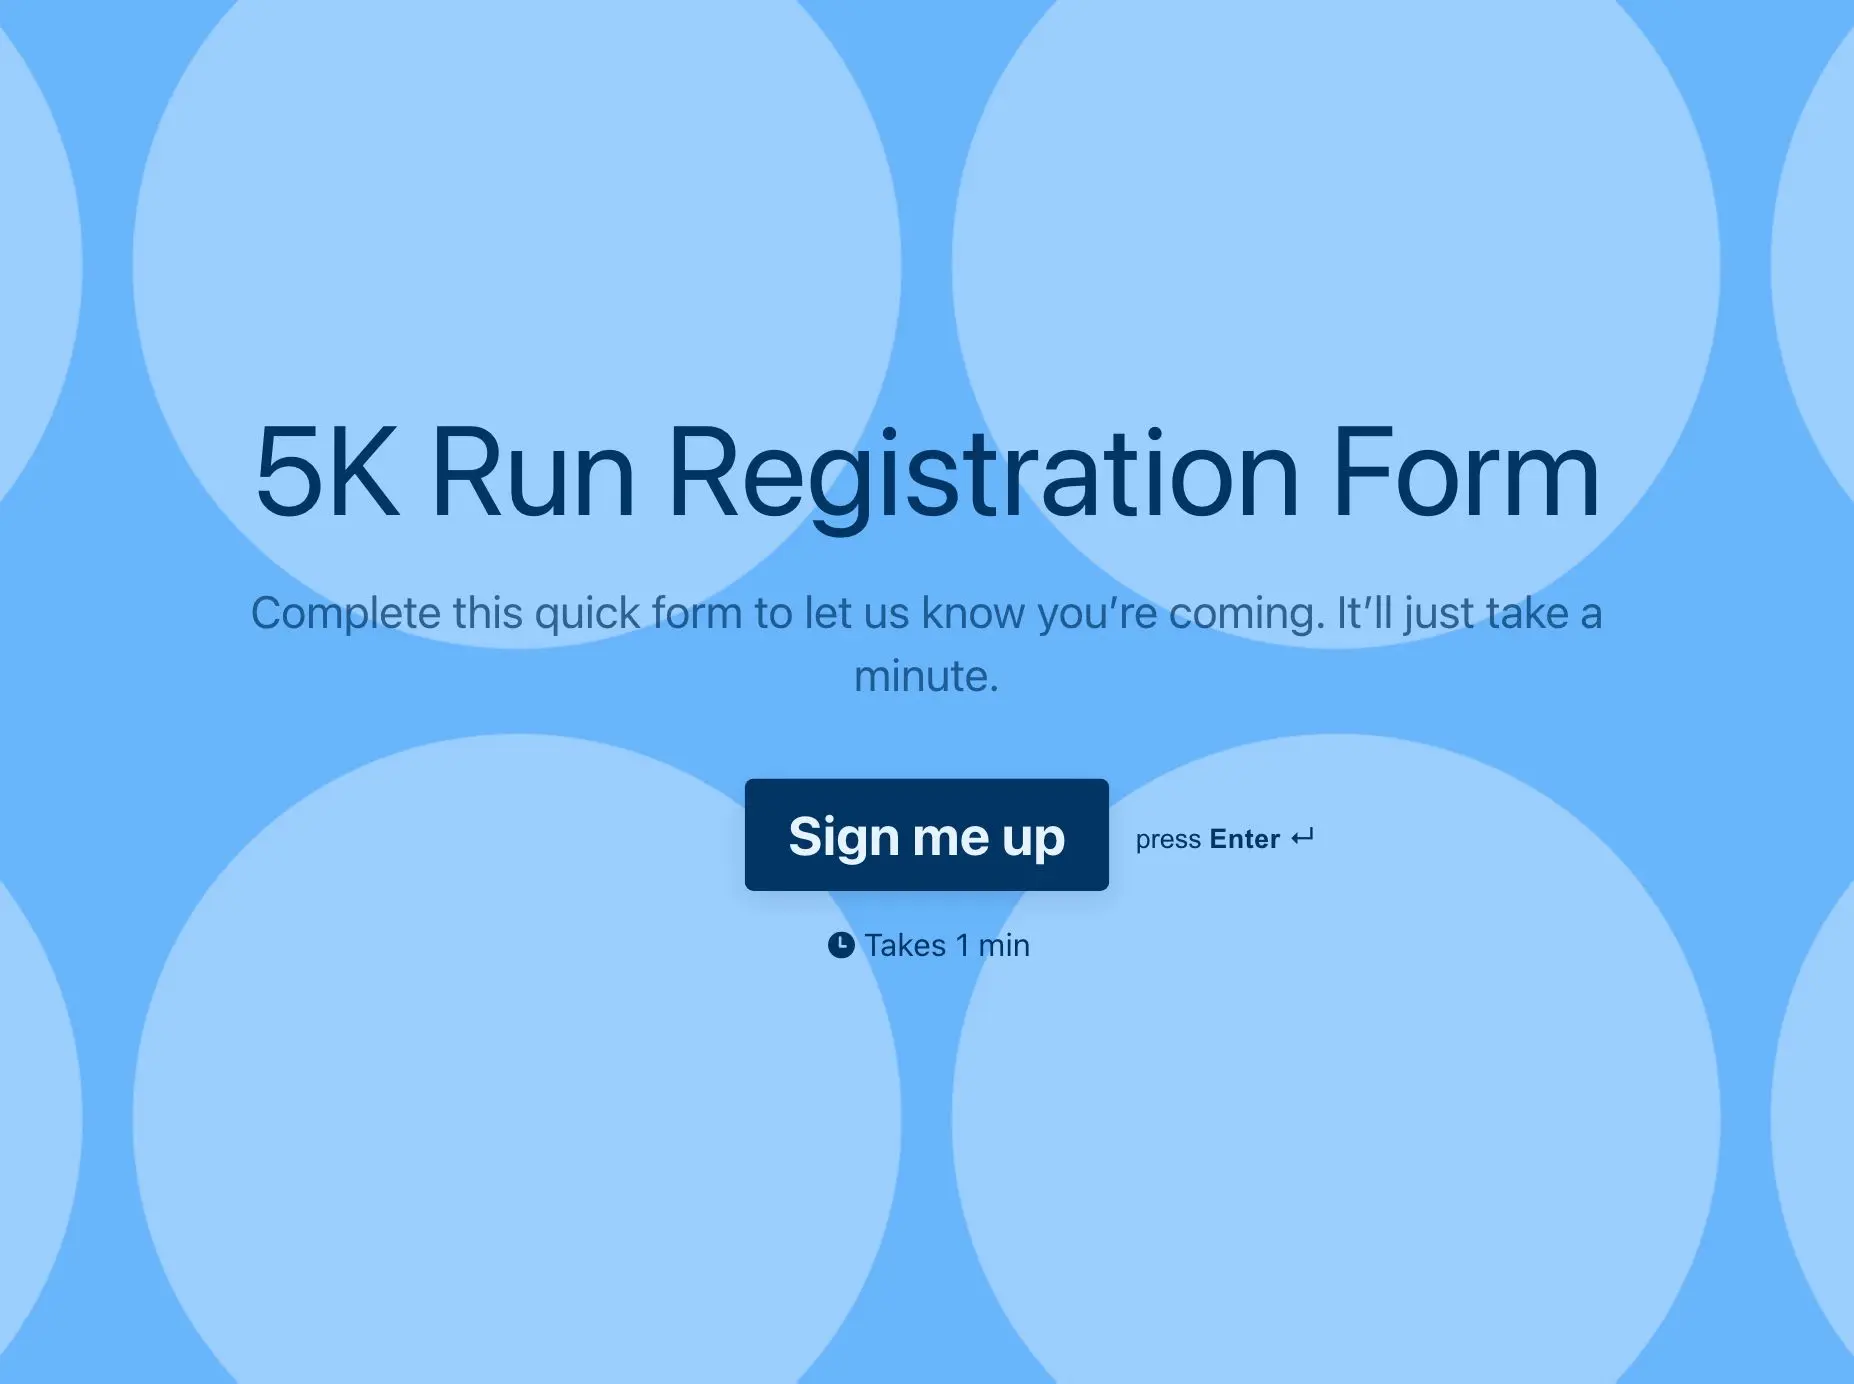 5K Run Registration Form Template Hero